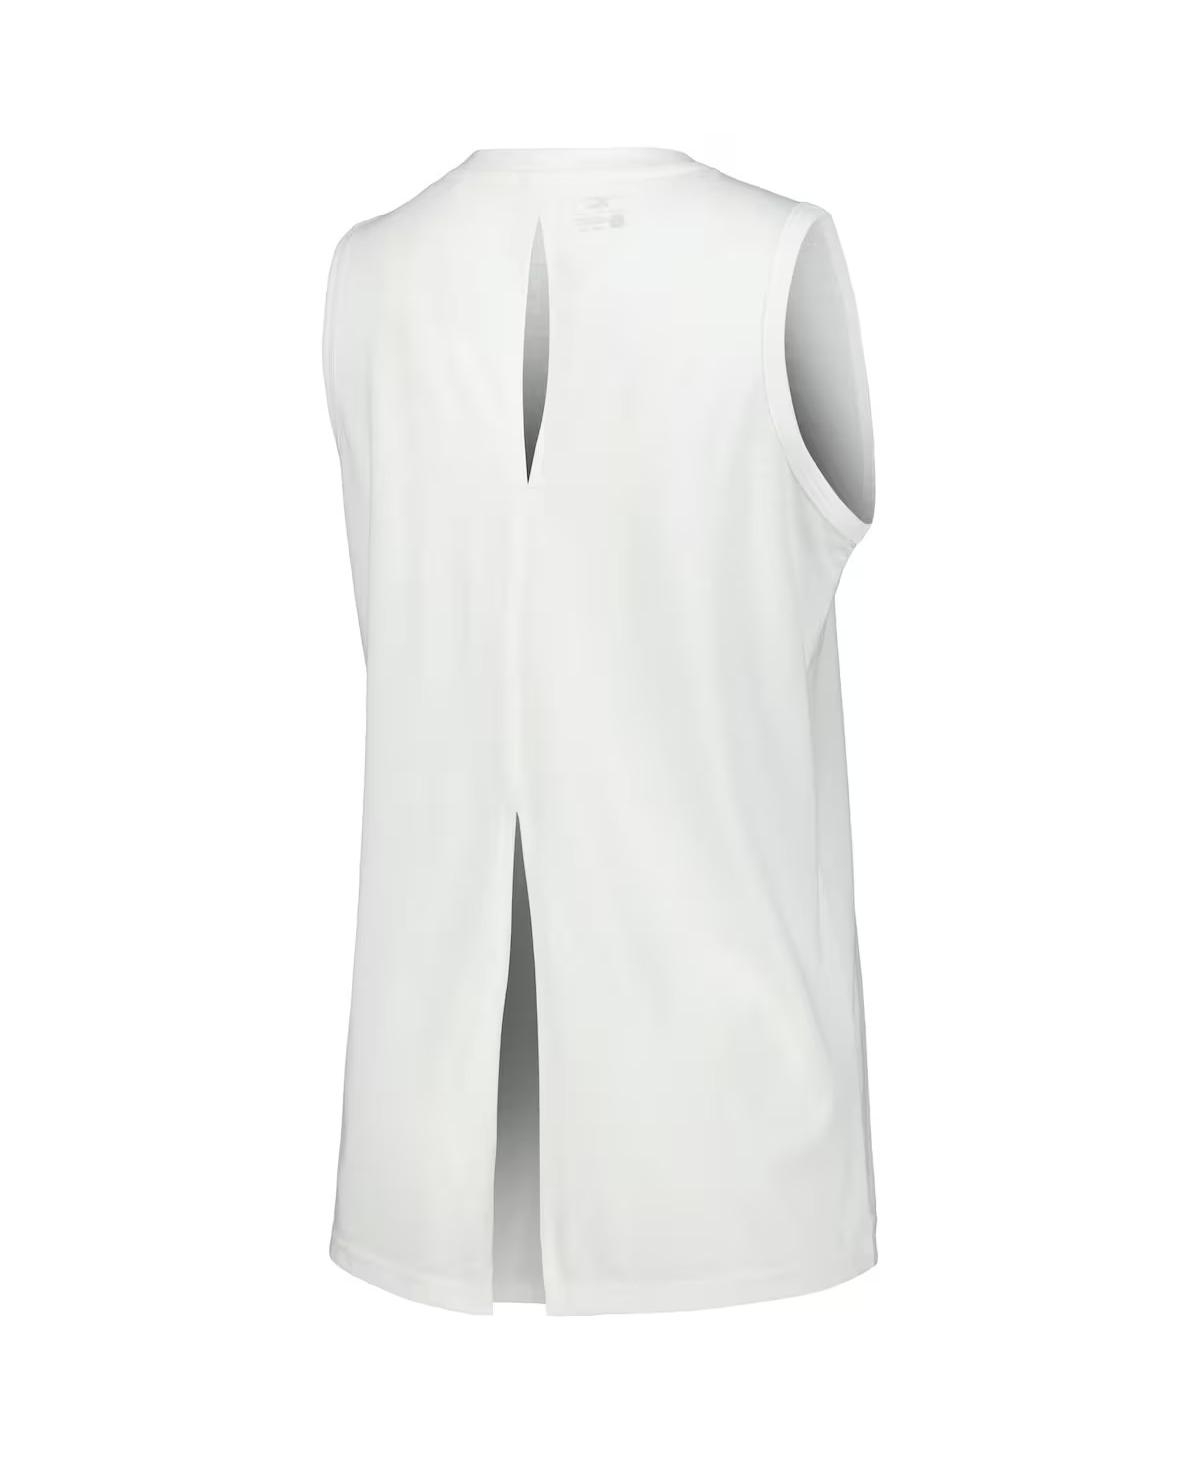 Shop Levelwear Women's White Boston Celtics Paisley Peekaboo Tank Top